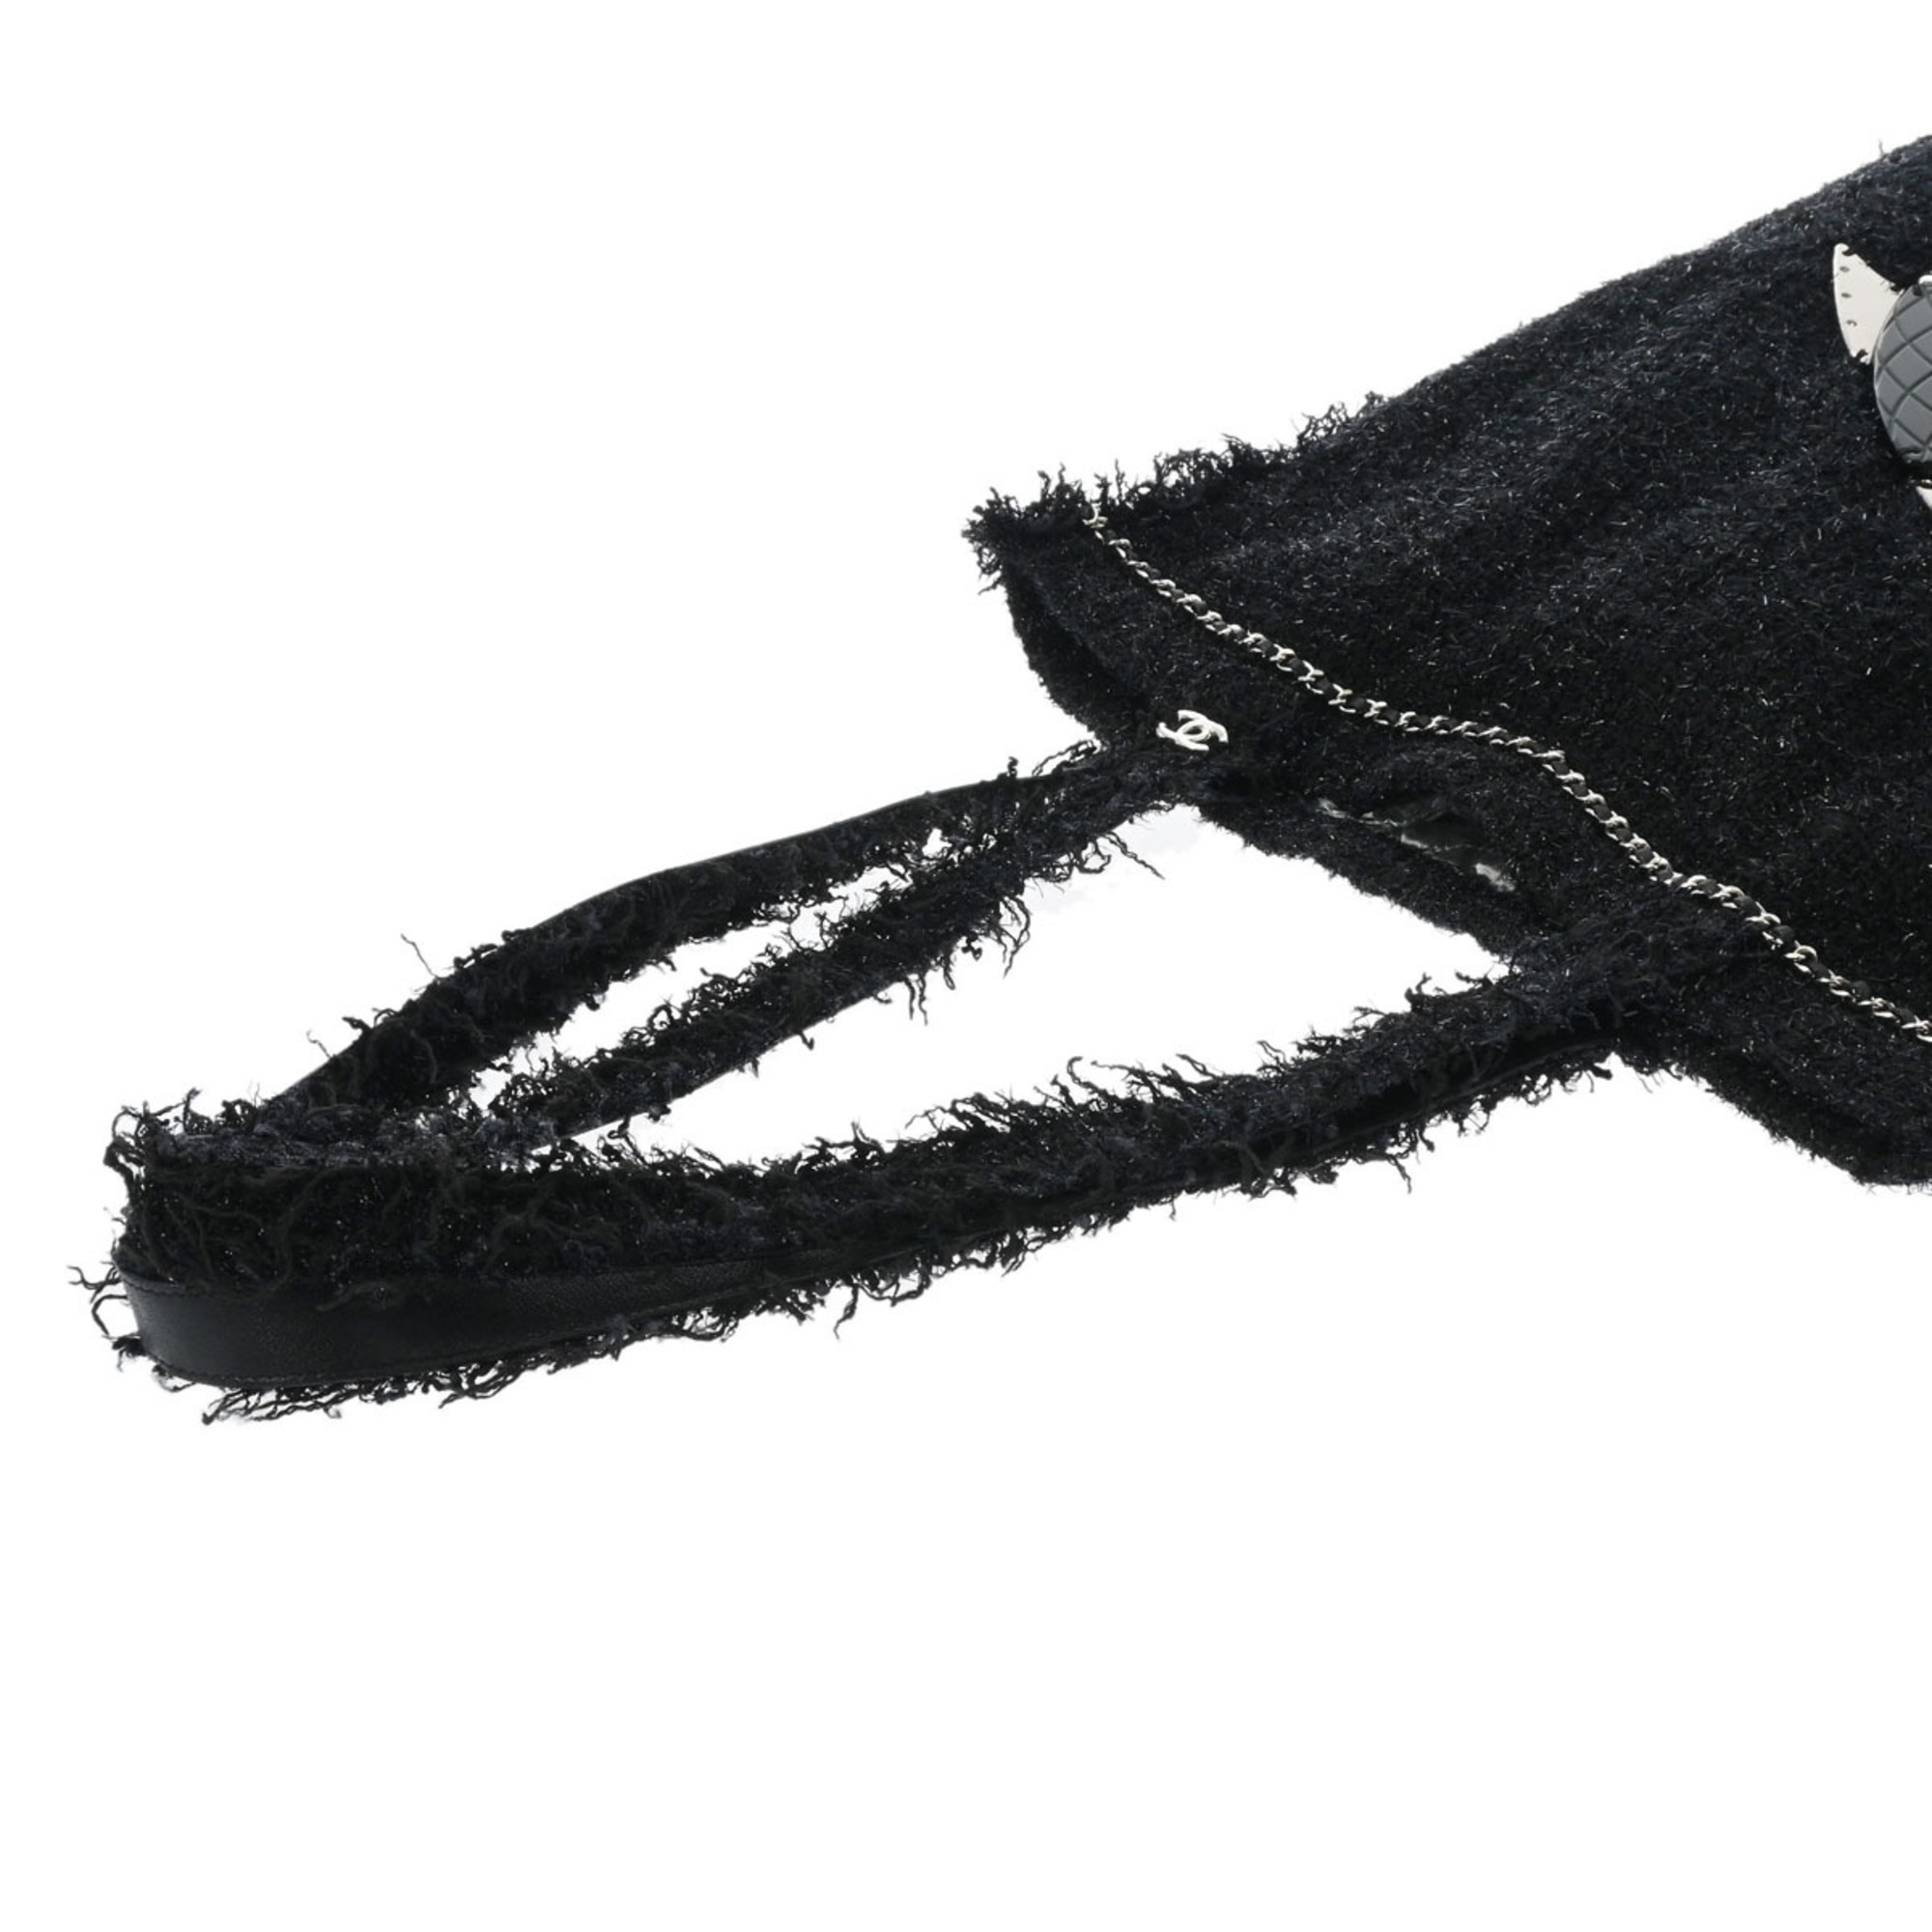 CHANEL Rocket Black - Women's Tweed Tote Bag